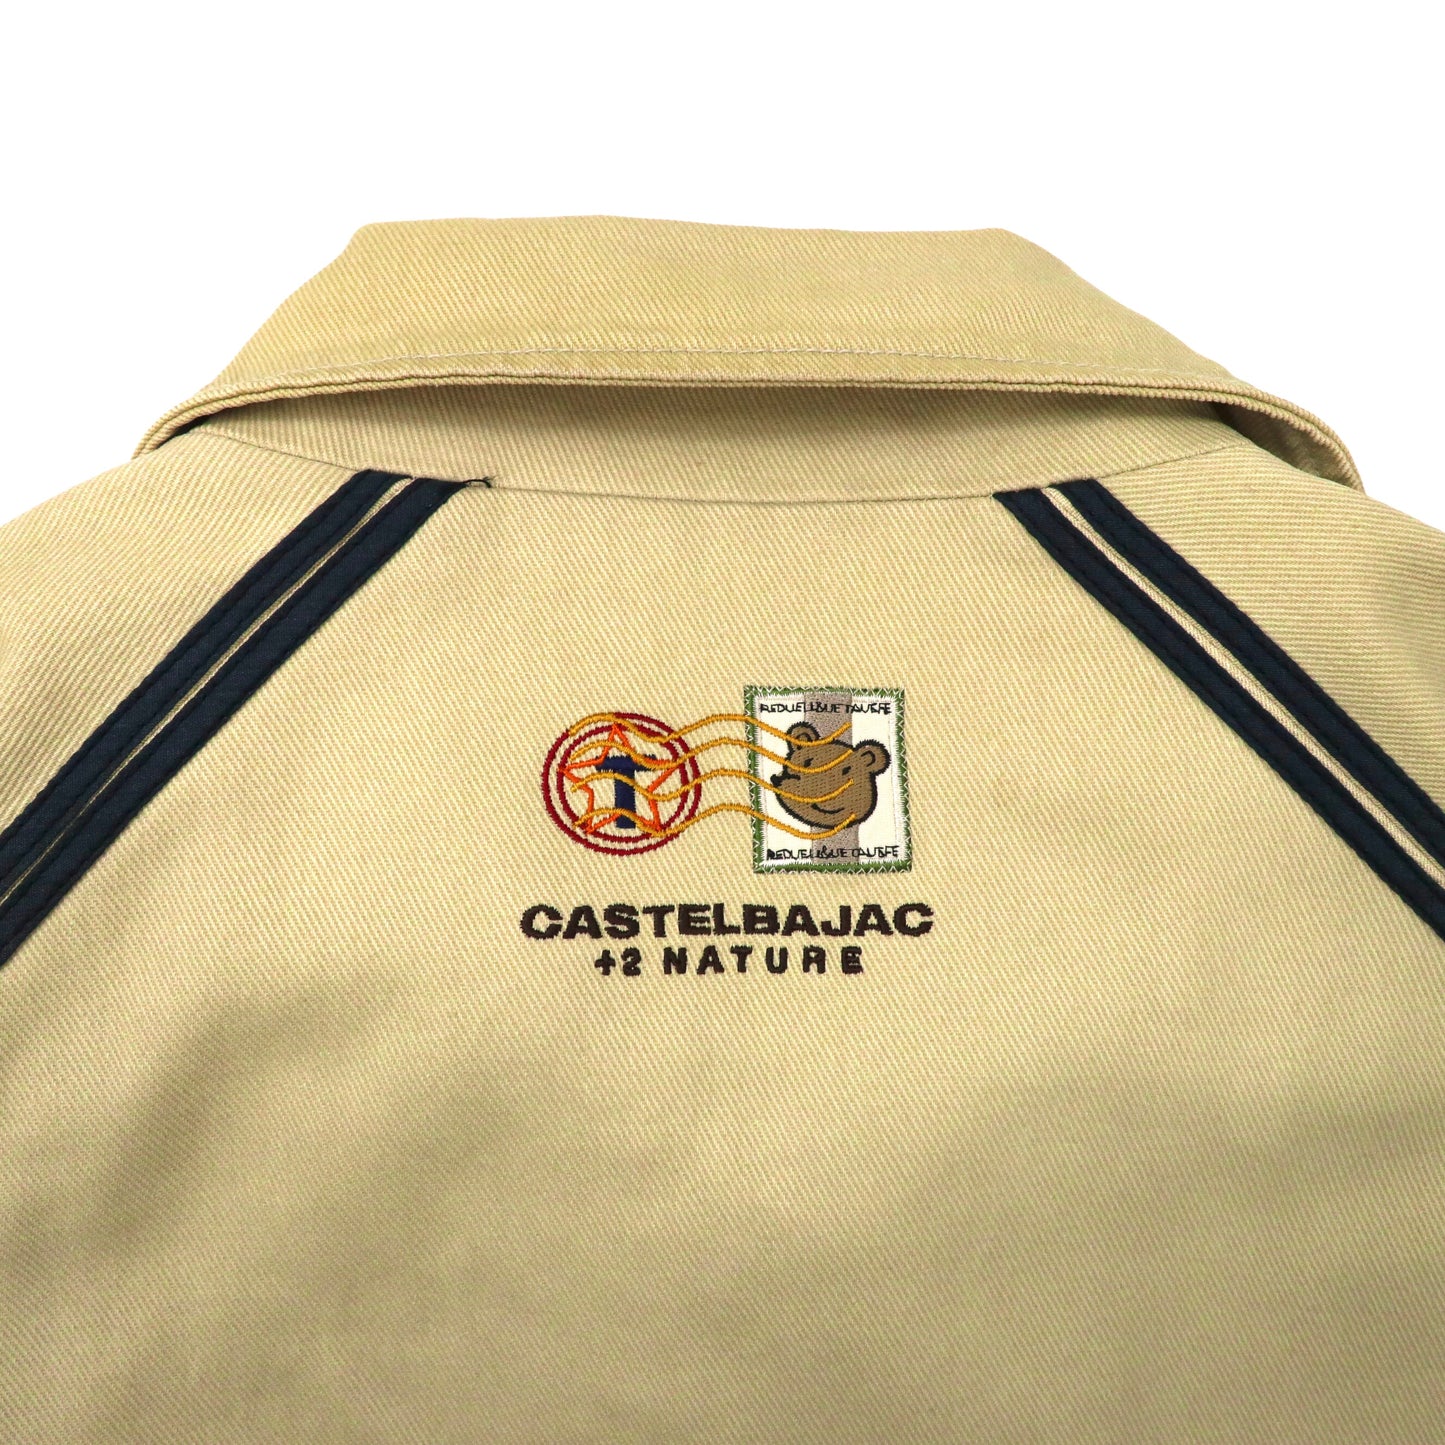 CASTELBAJAC +2 NATURE ワークジャケット 3 ベージュ コットン ロゴ